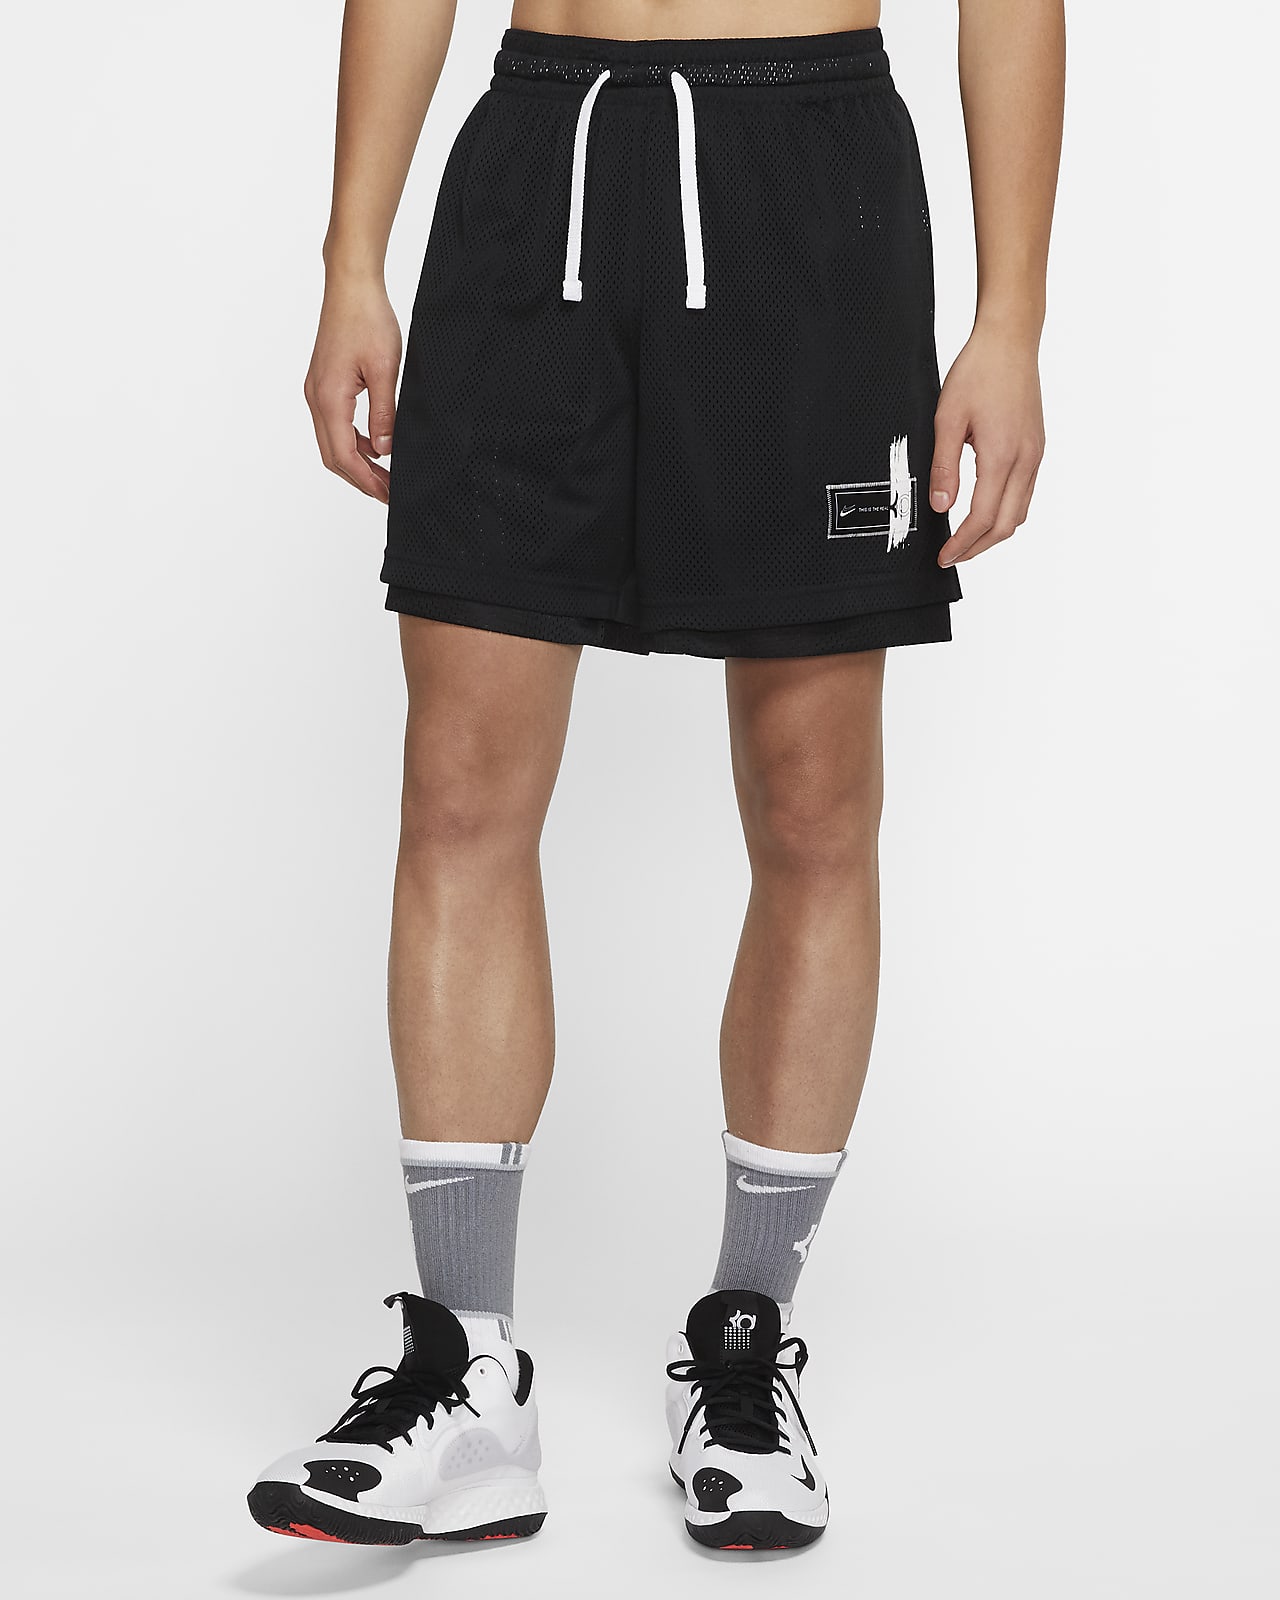 KD Nike 男子篮球短裤